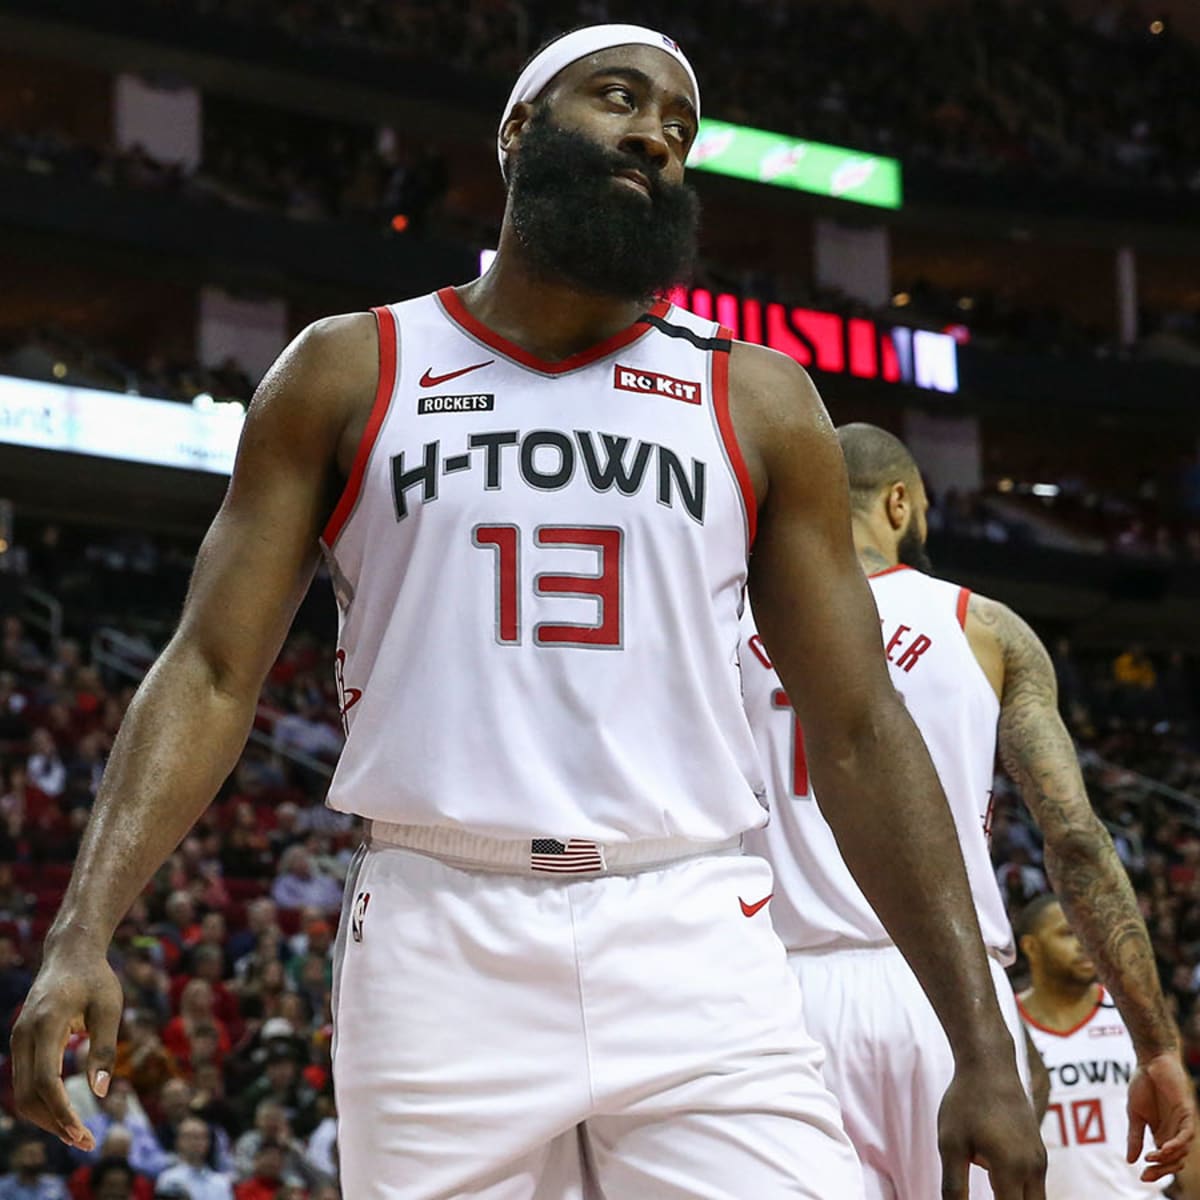 Kings, Trail Blazer fumble trades as NBA deadline looms